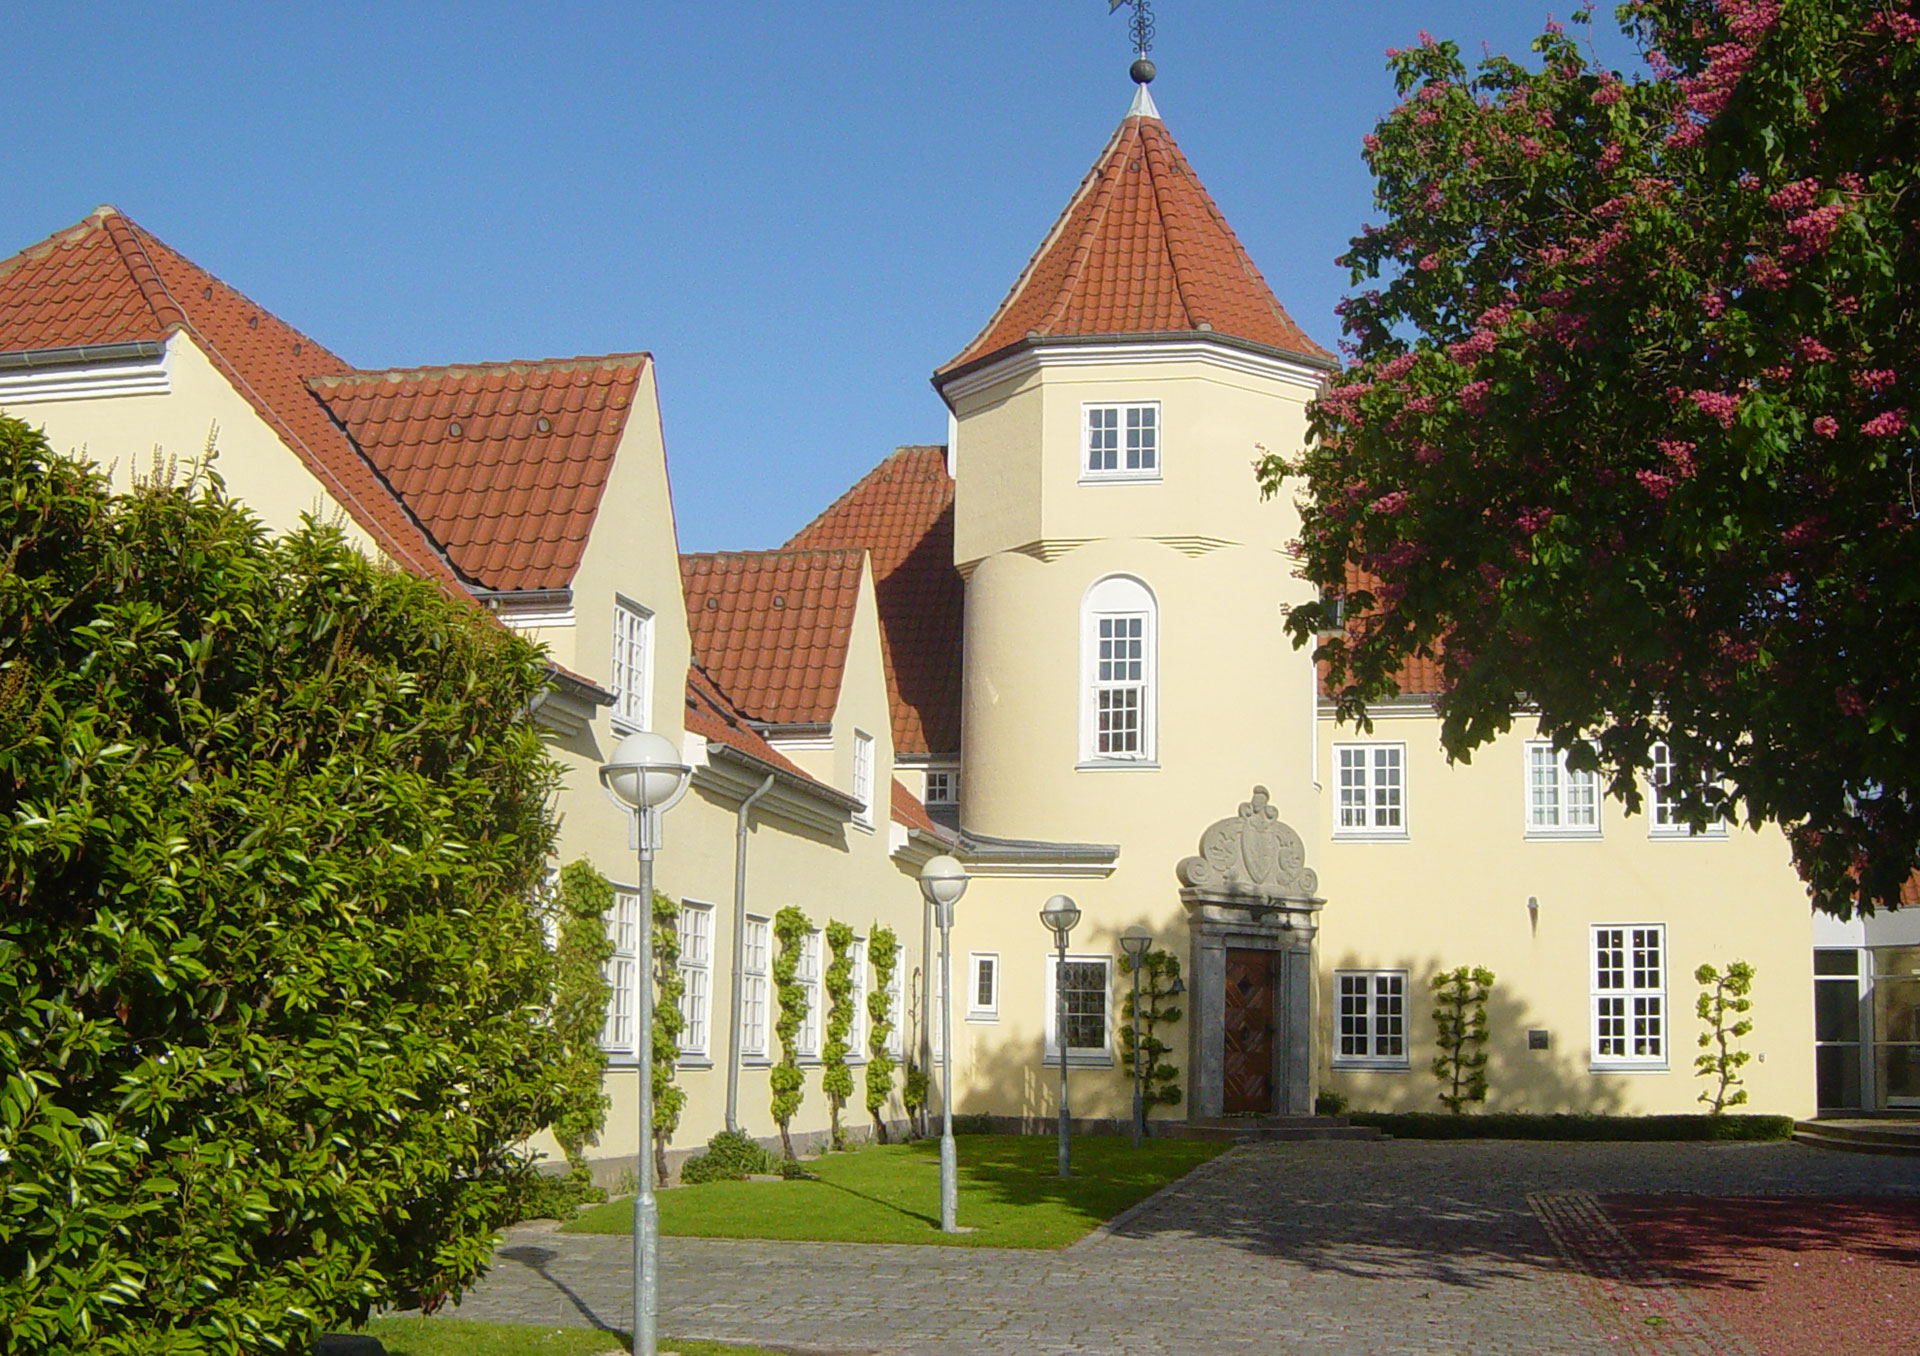 Gammel Avernæs en smuk pastelgul slotsagtig bygning med rødte tegtag